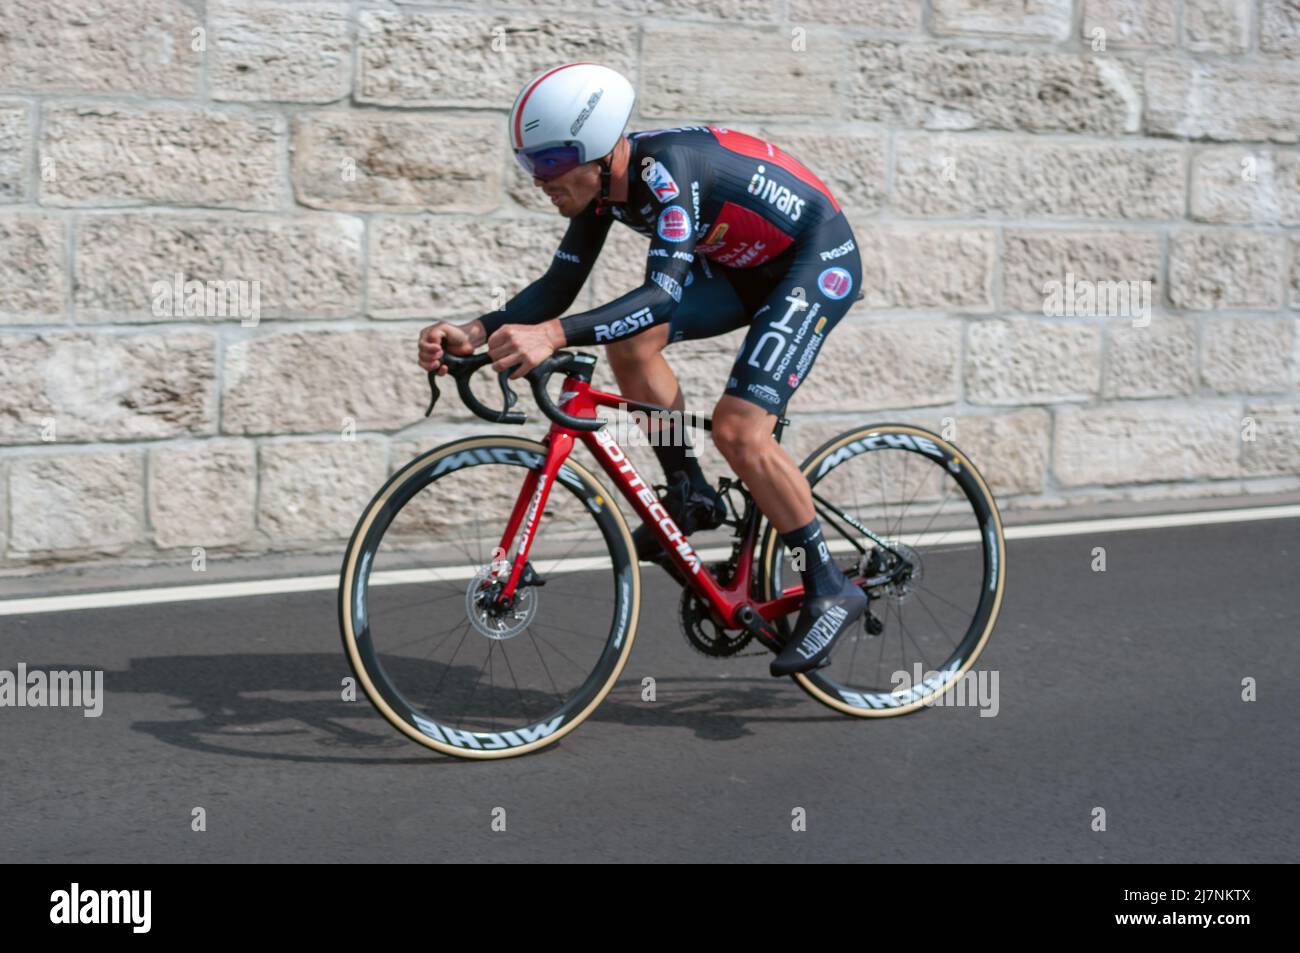 BUDAPEST, HUNGARY - MAY 07, 2022: Pro cyclist Edoardo Zardini DRONE HOPPER - ANDRONI GIOCATTOLI, Giro D'Italia Stage 2 Time trial - cycling competitio Stock Photo